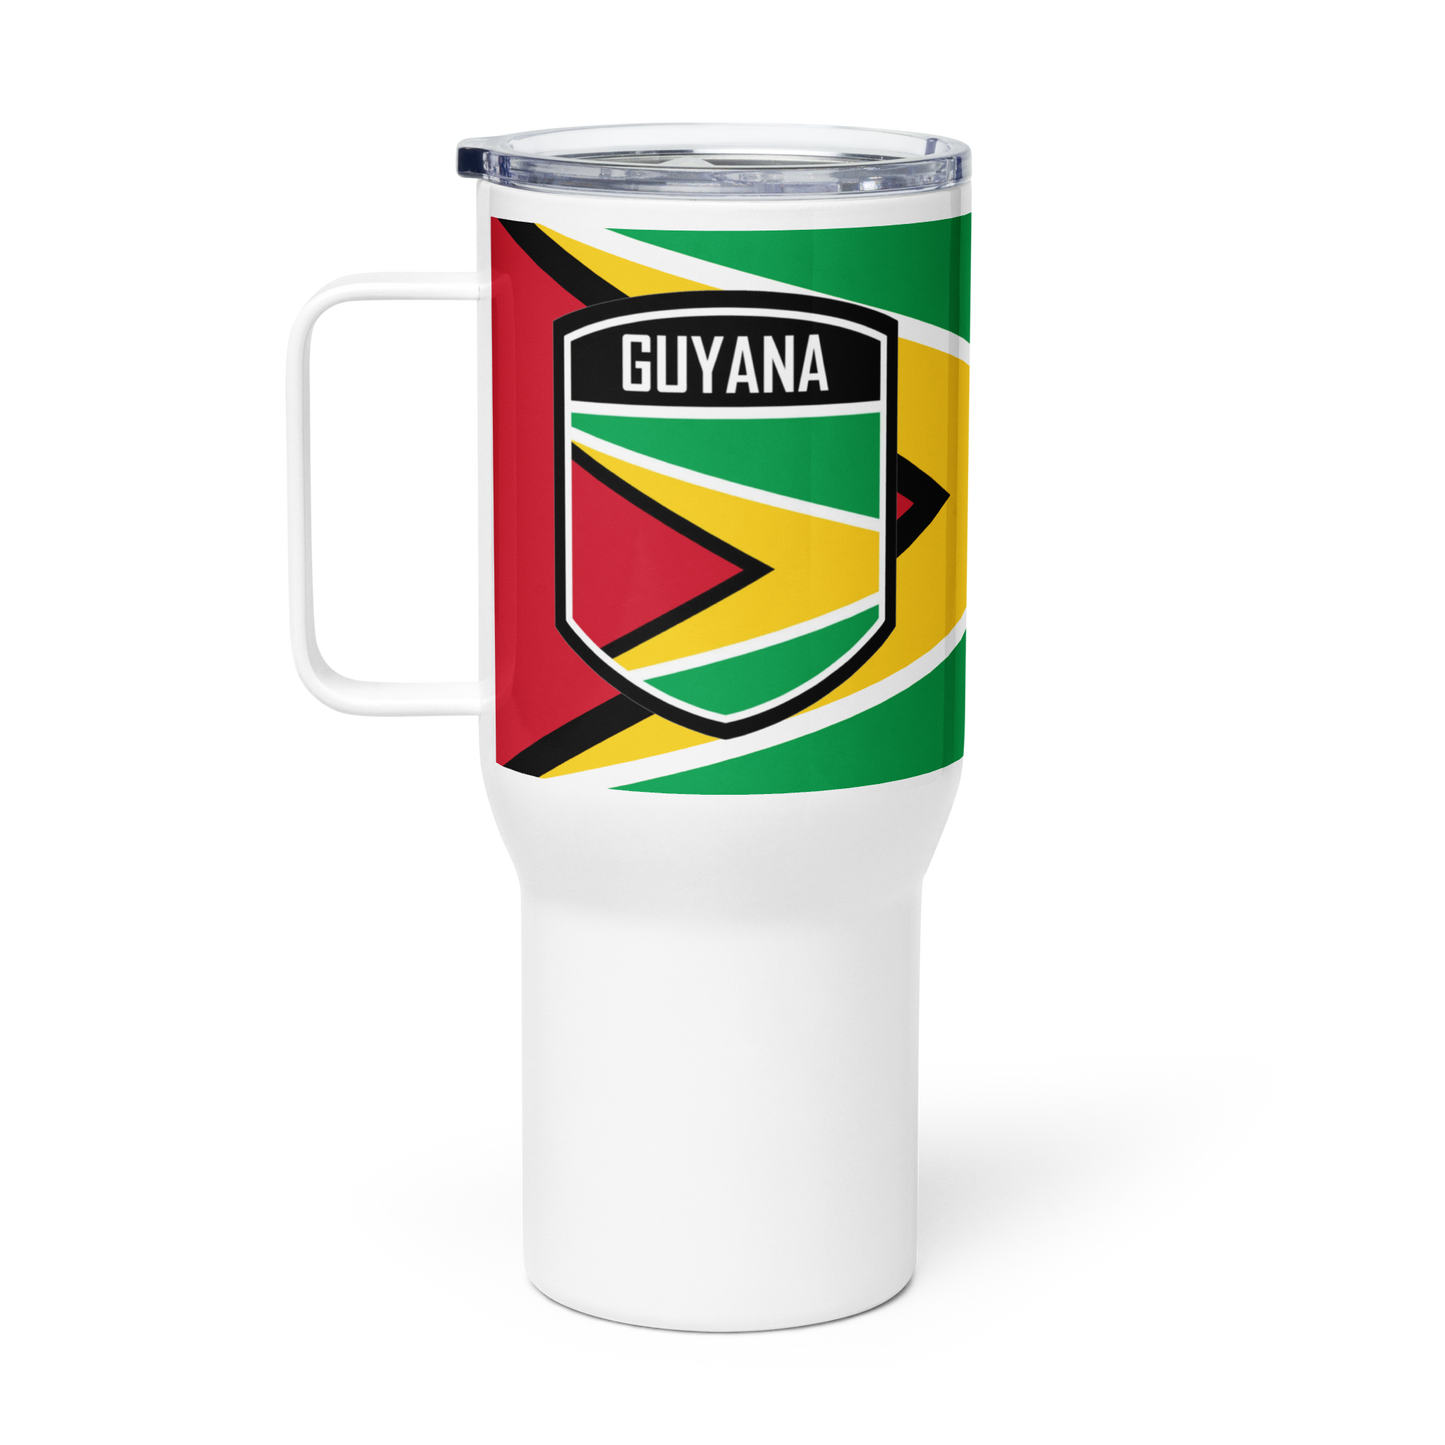 Guyana Travel mug with a handle